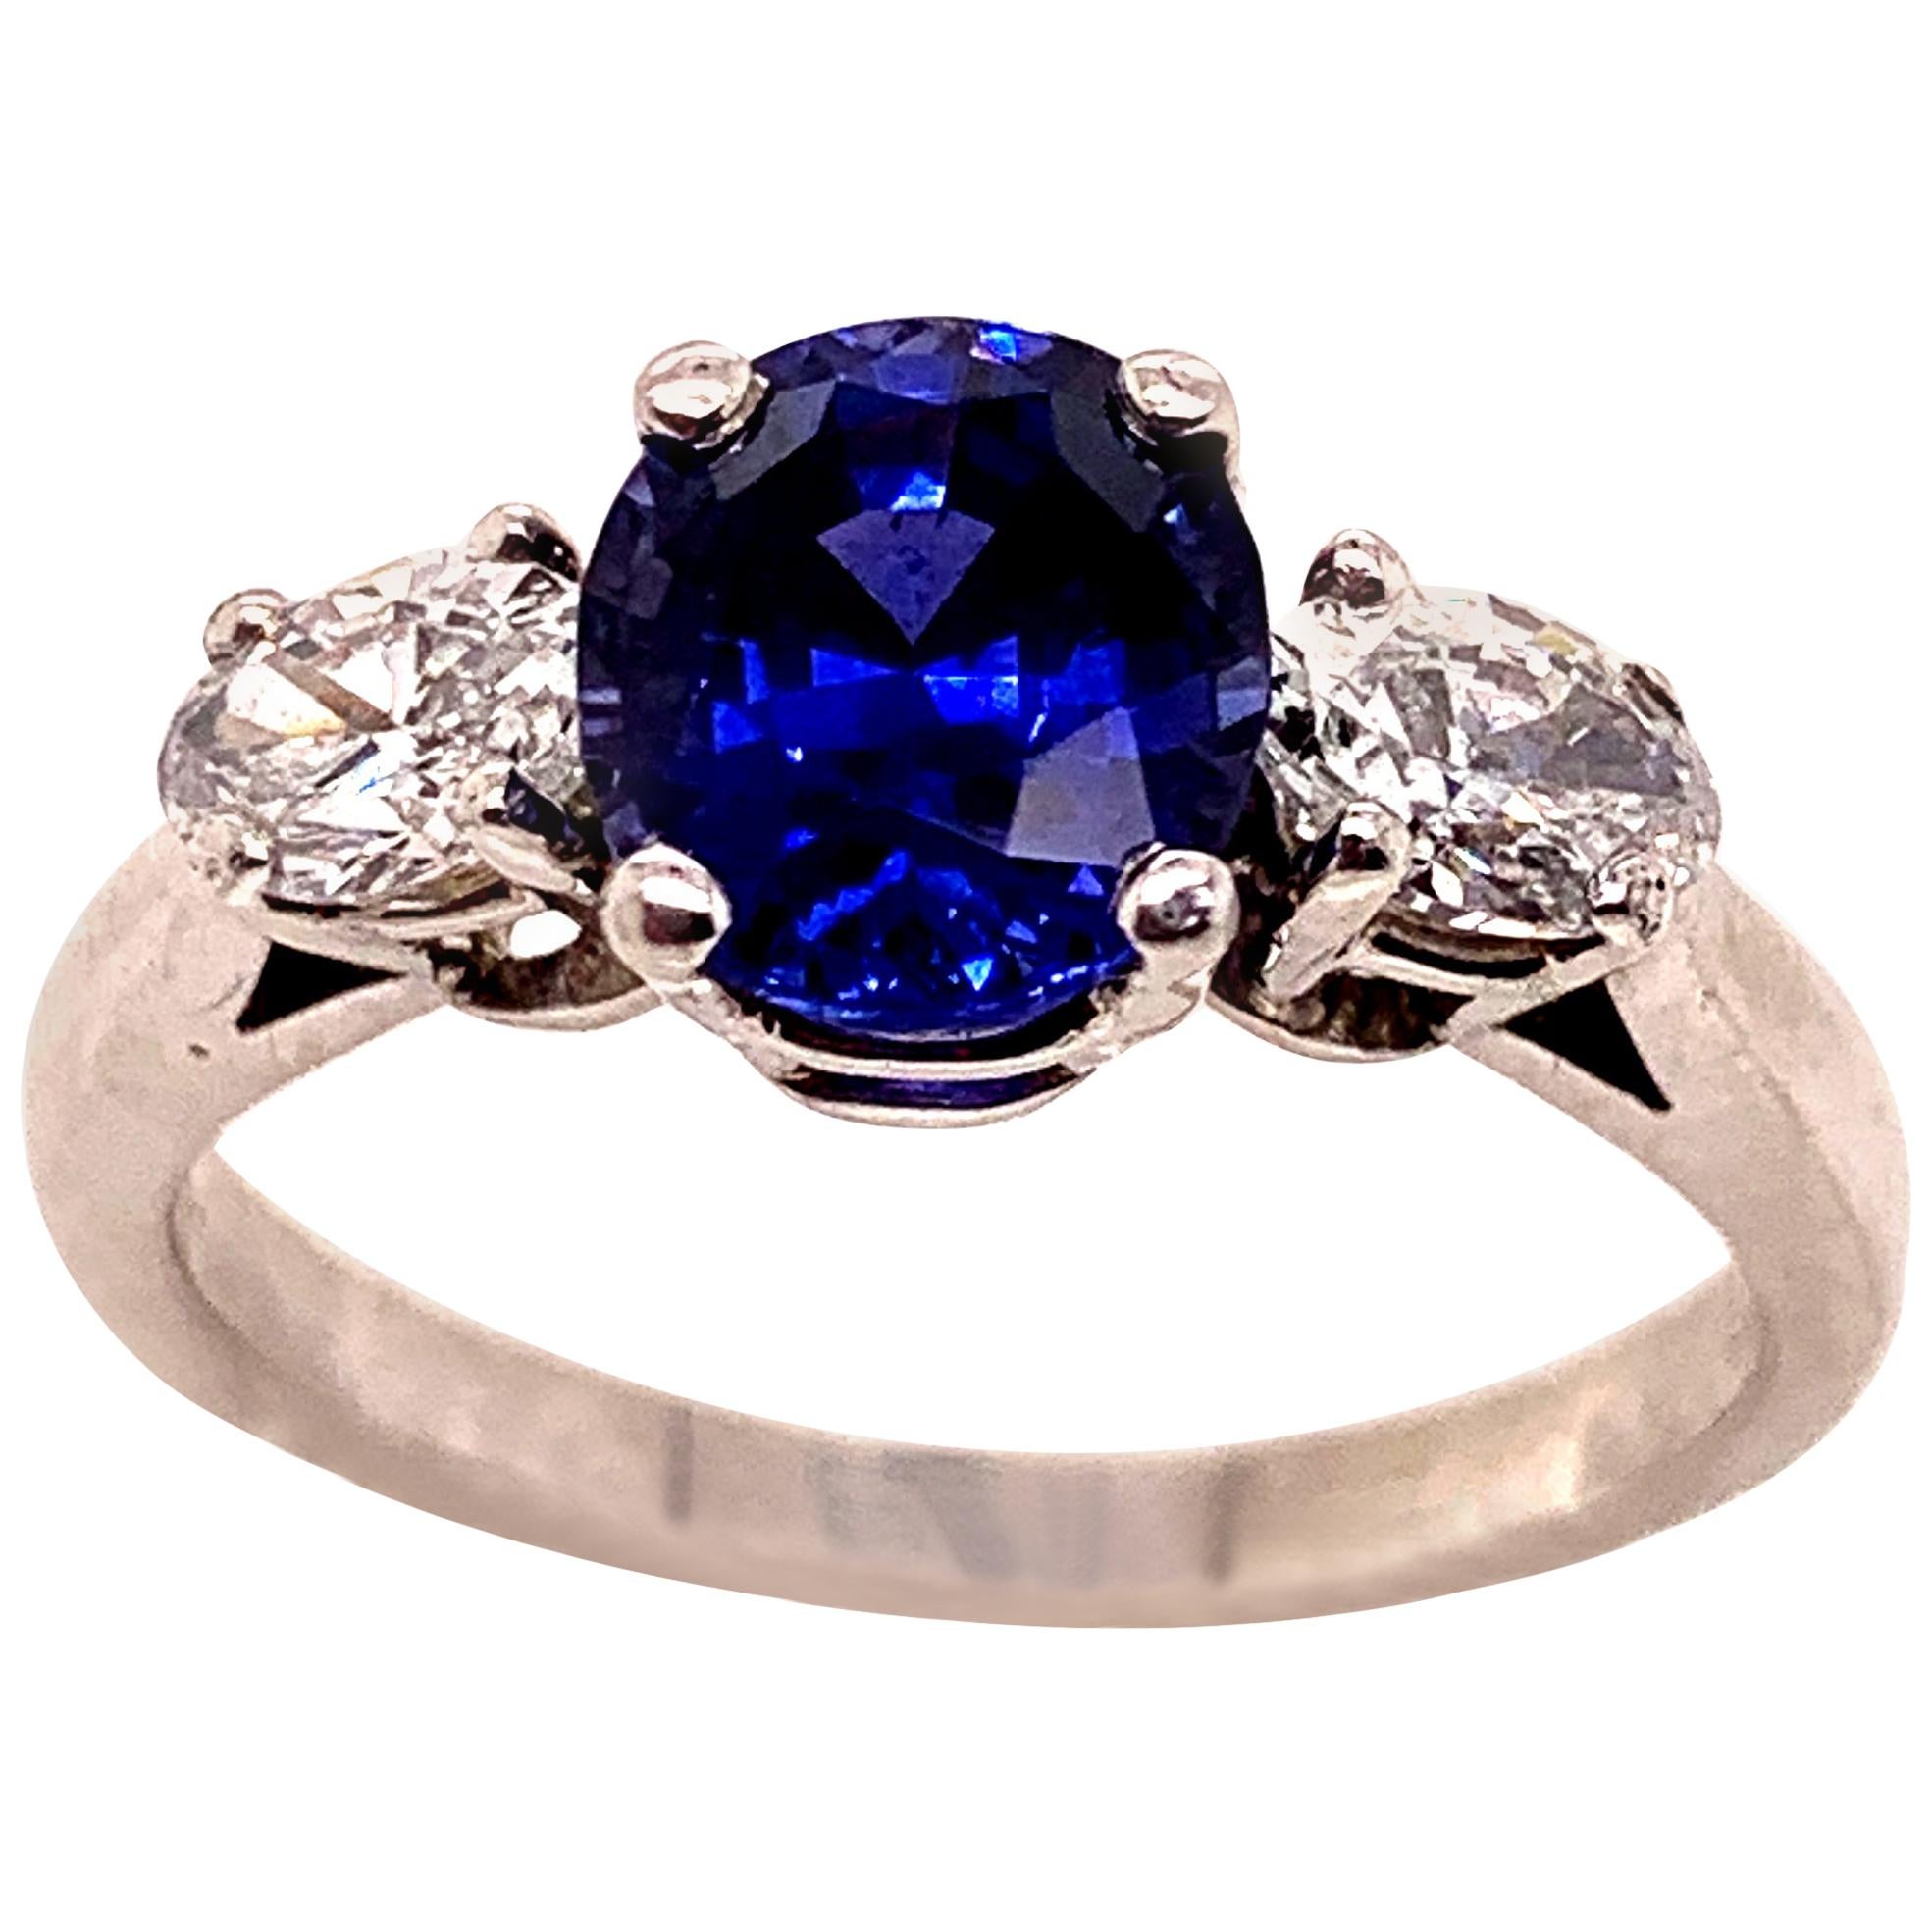 1.82 Carat GIA Blue Sapphire and Diamond Ring in Platinum